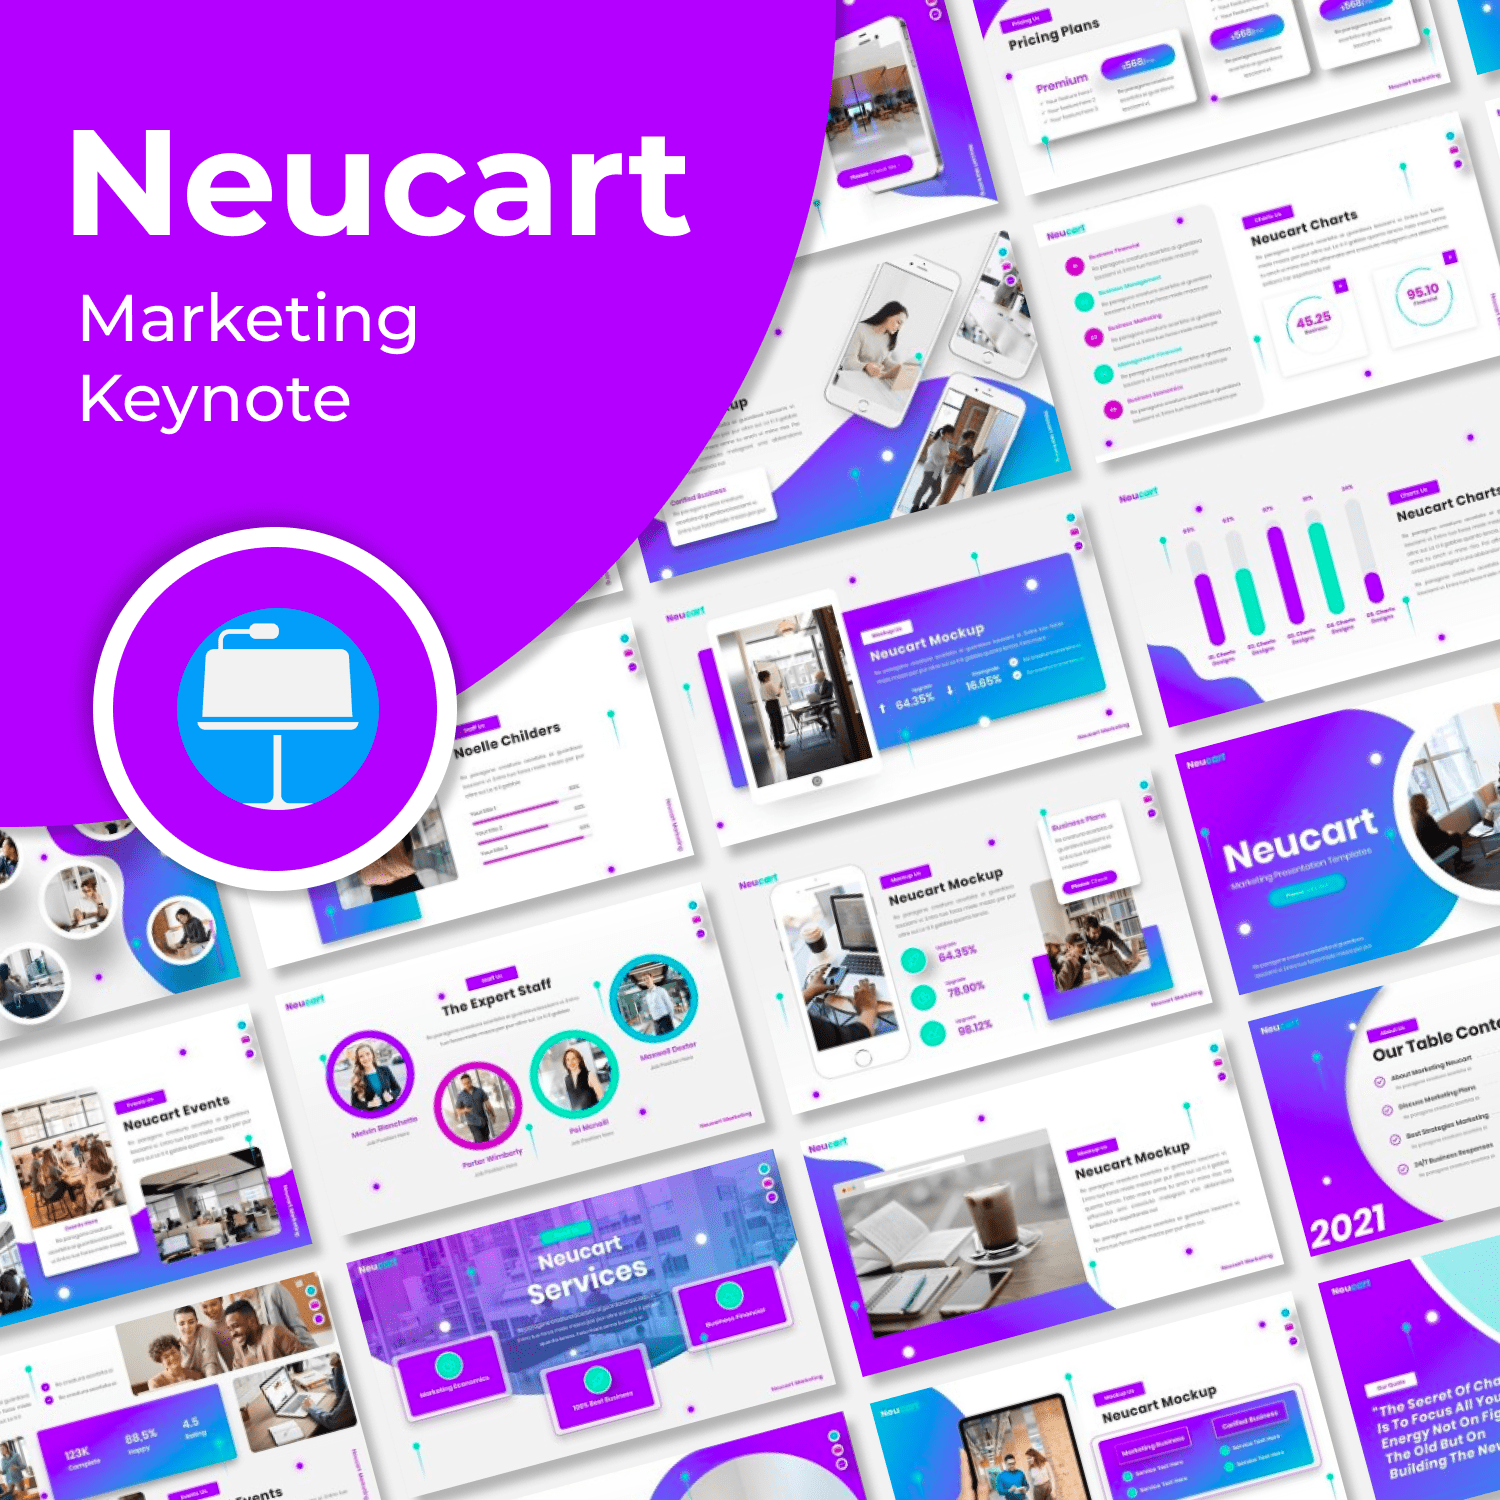 Neucart marketing keynote cover.